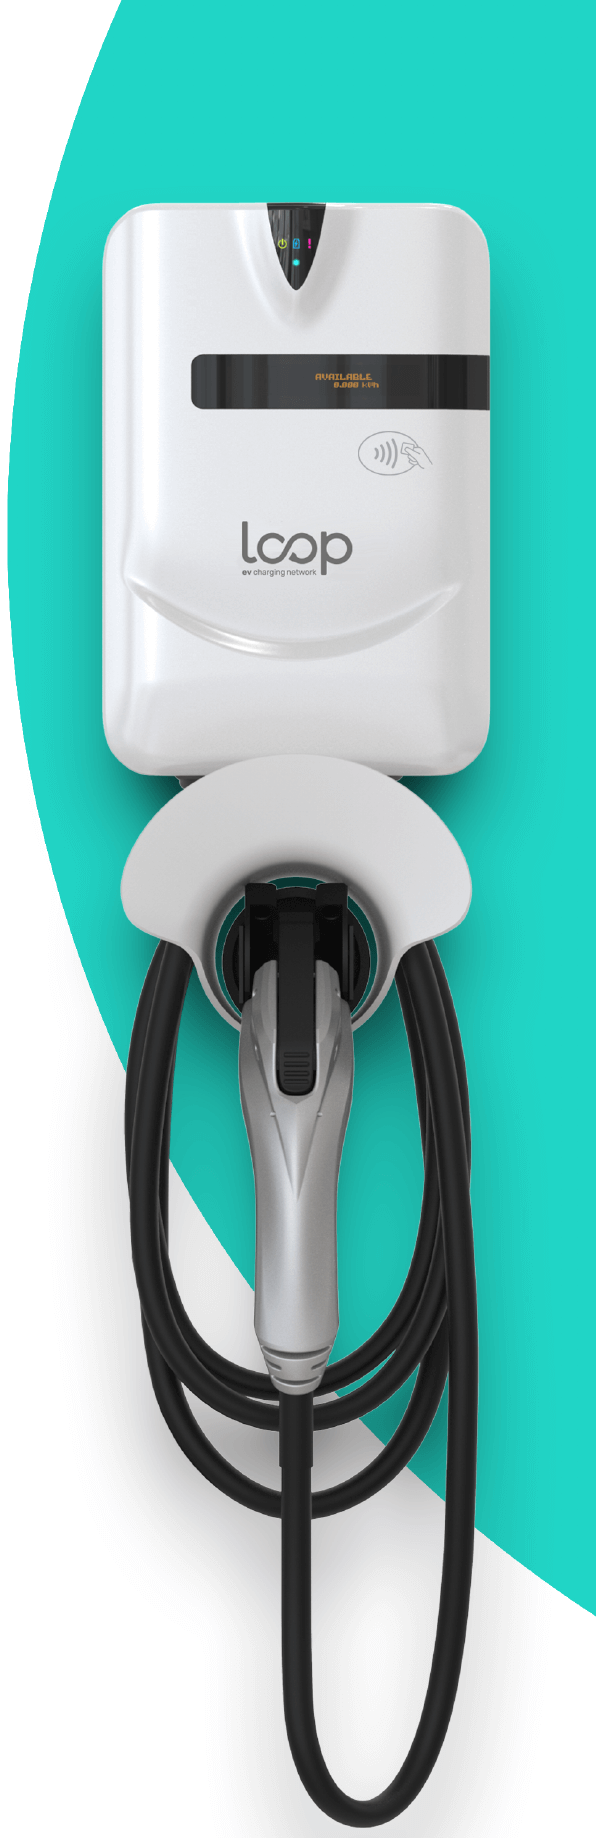 ev-flex-loop-ev-charger-commercial-home-charging-station-electric-vehicle-optimum-energy-services